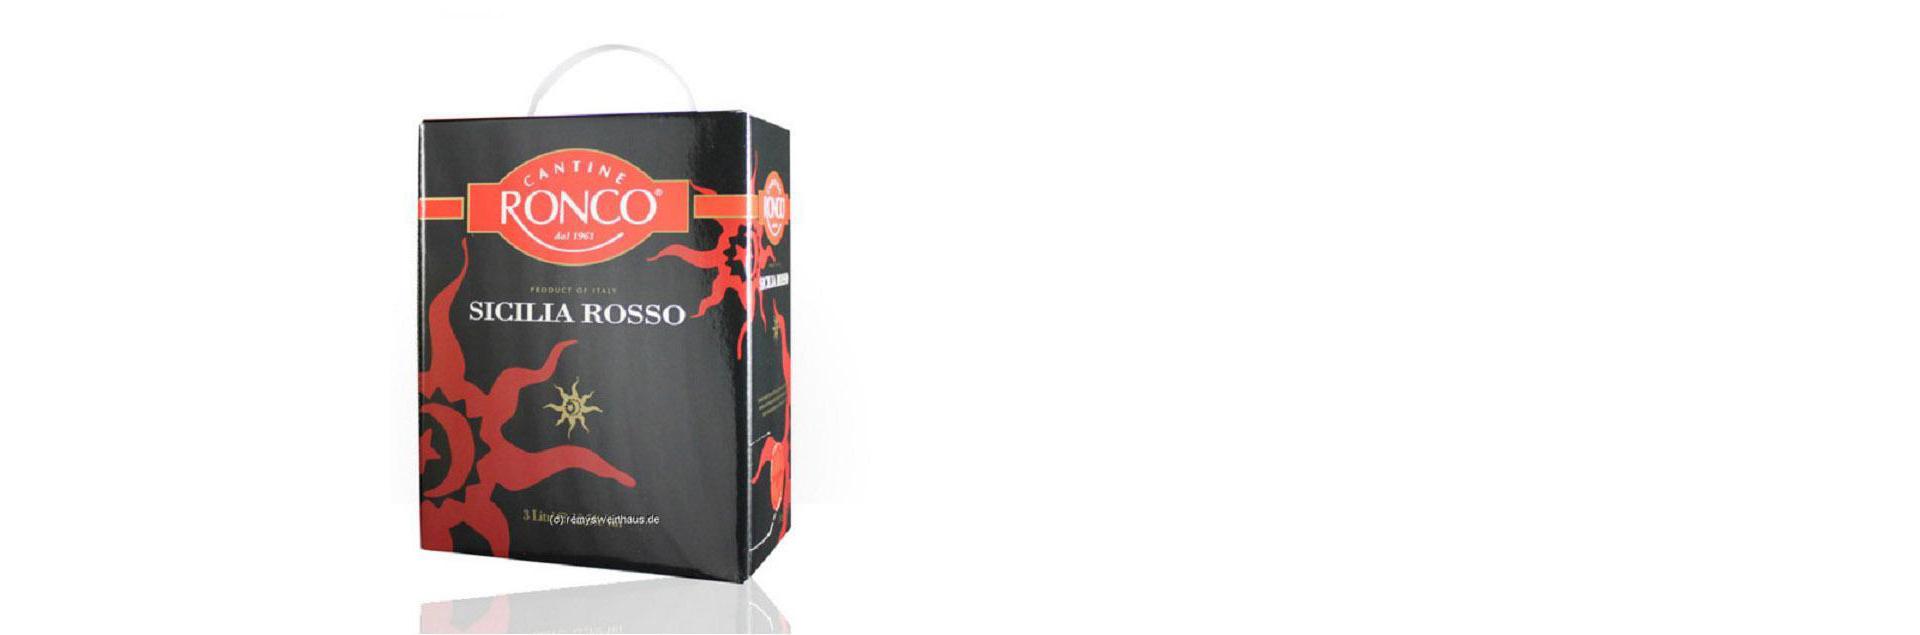 Rượu vang Ý Ronco Sicilia Rosso BIB Bag in Box